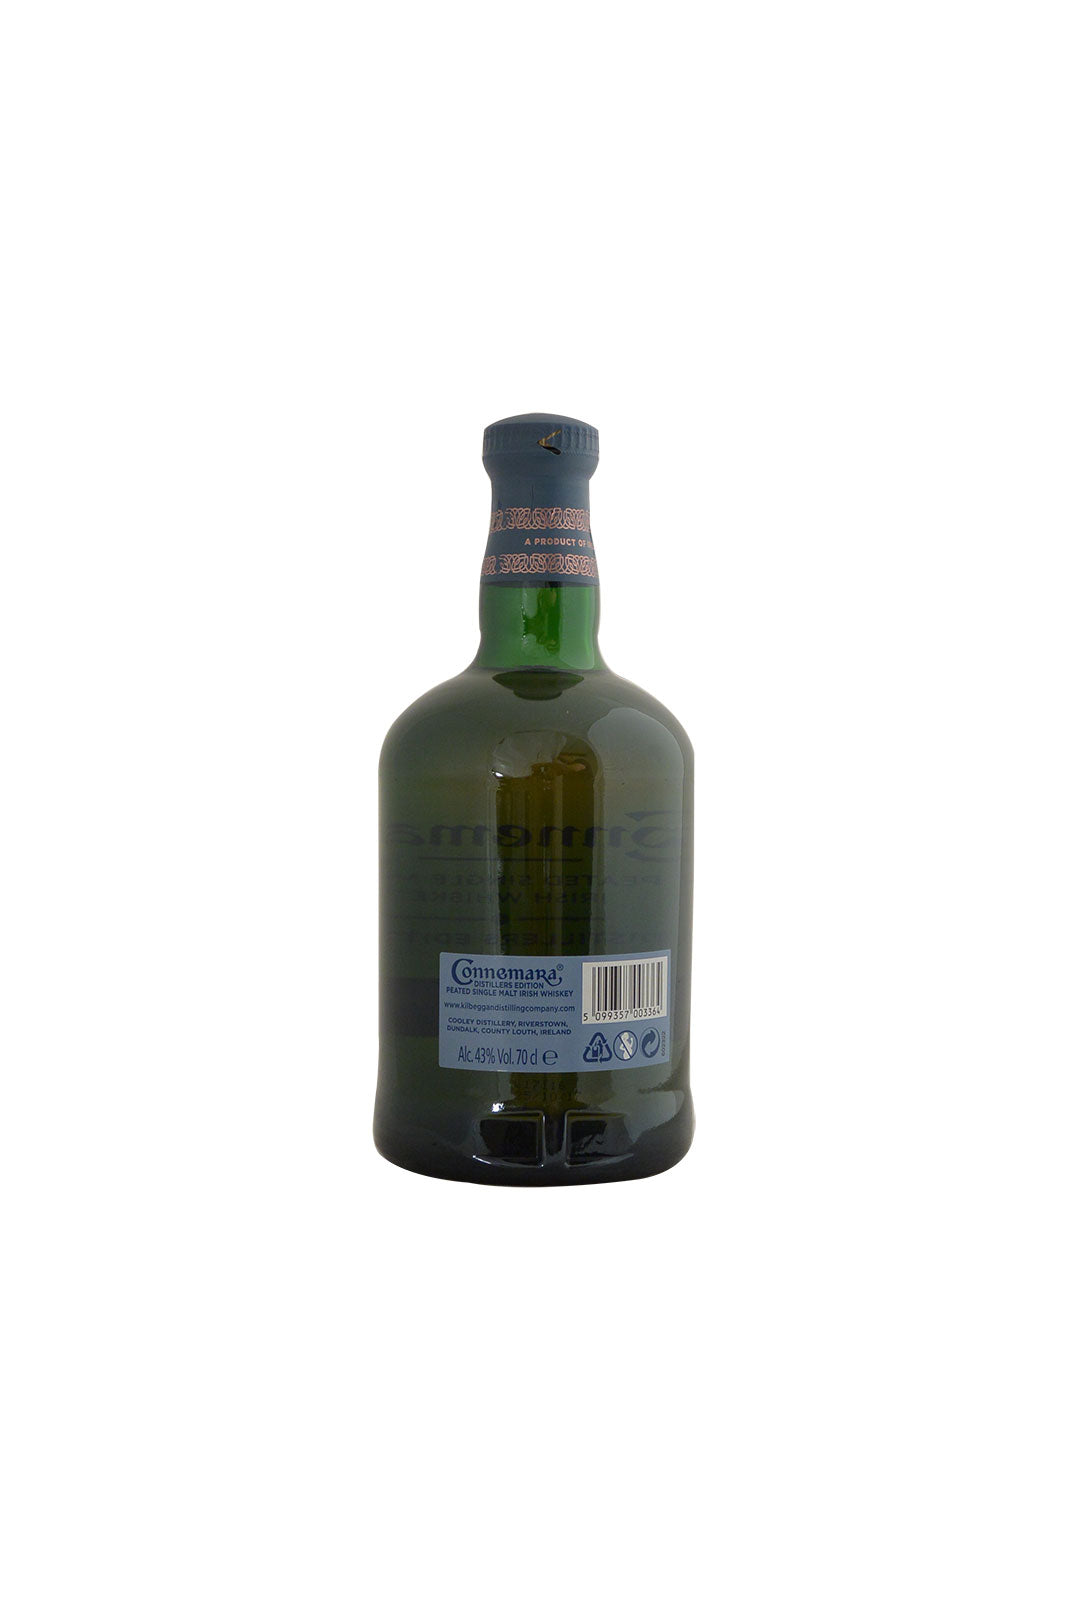 Connemara Peated Distillers Edition